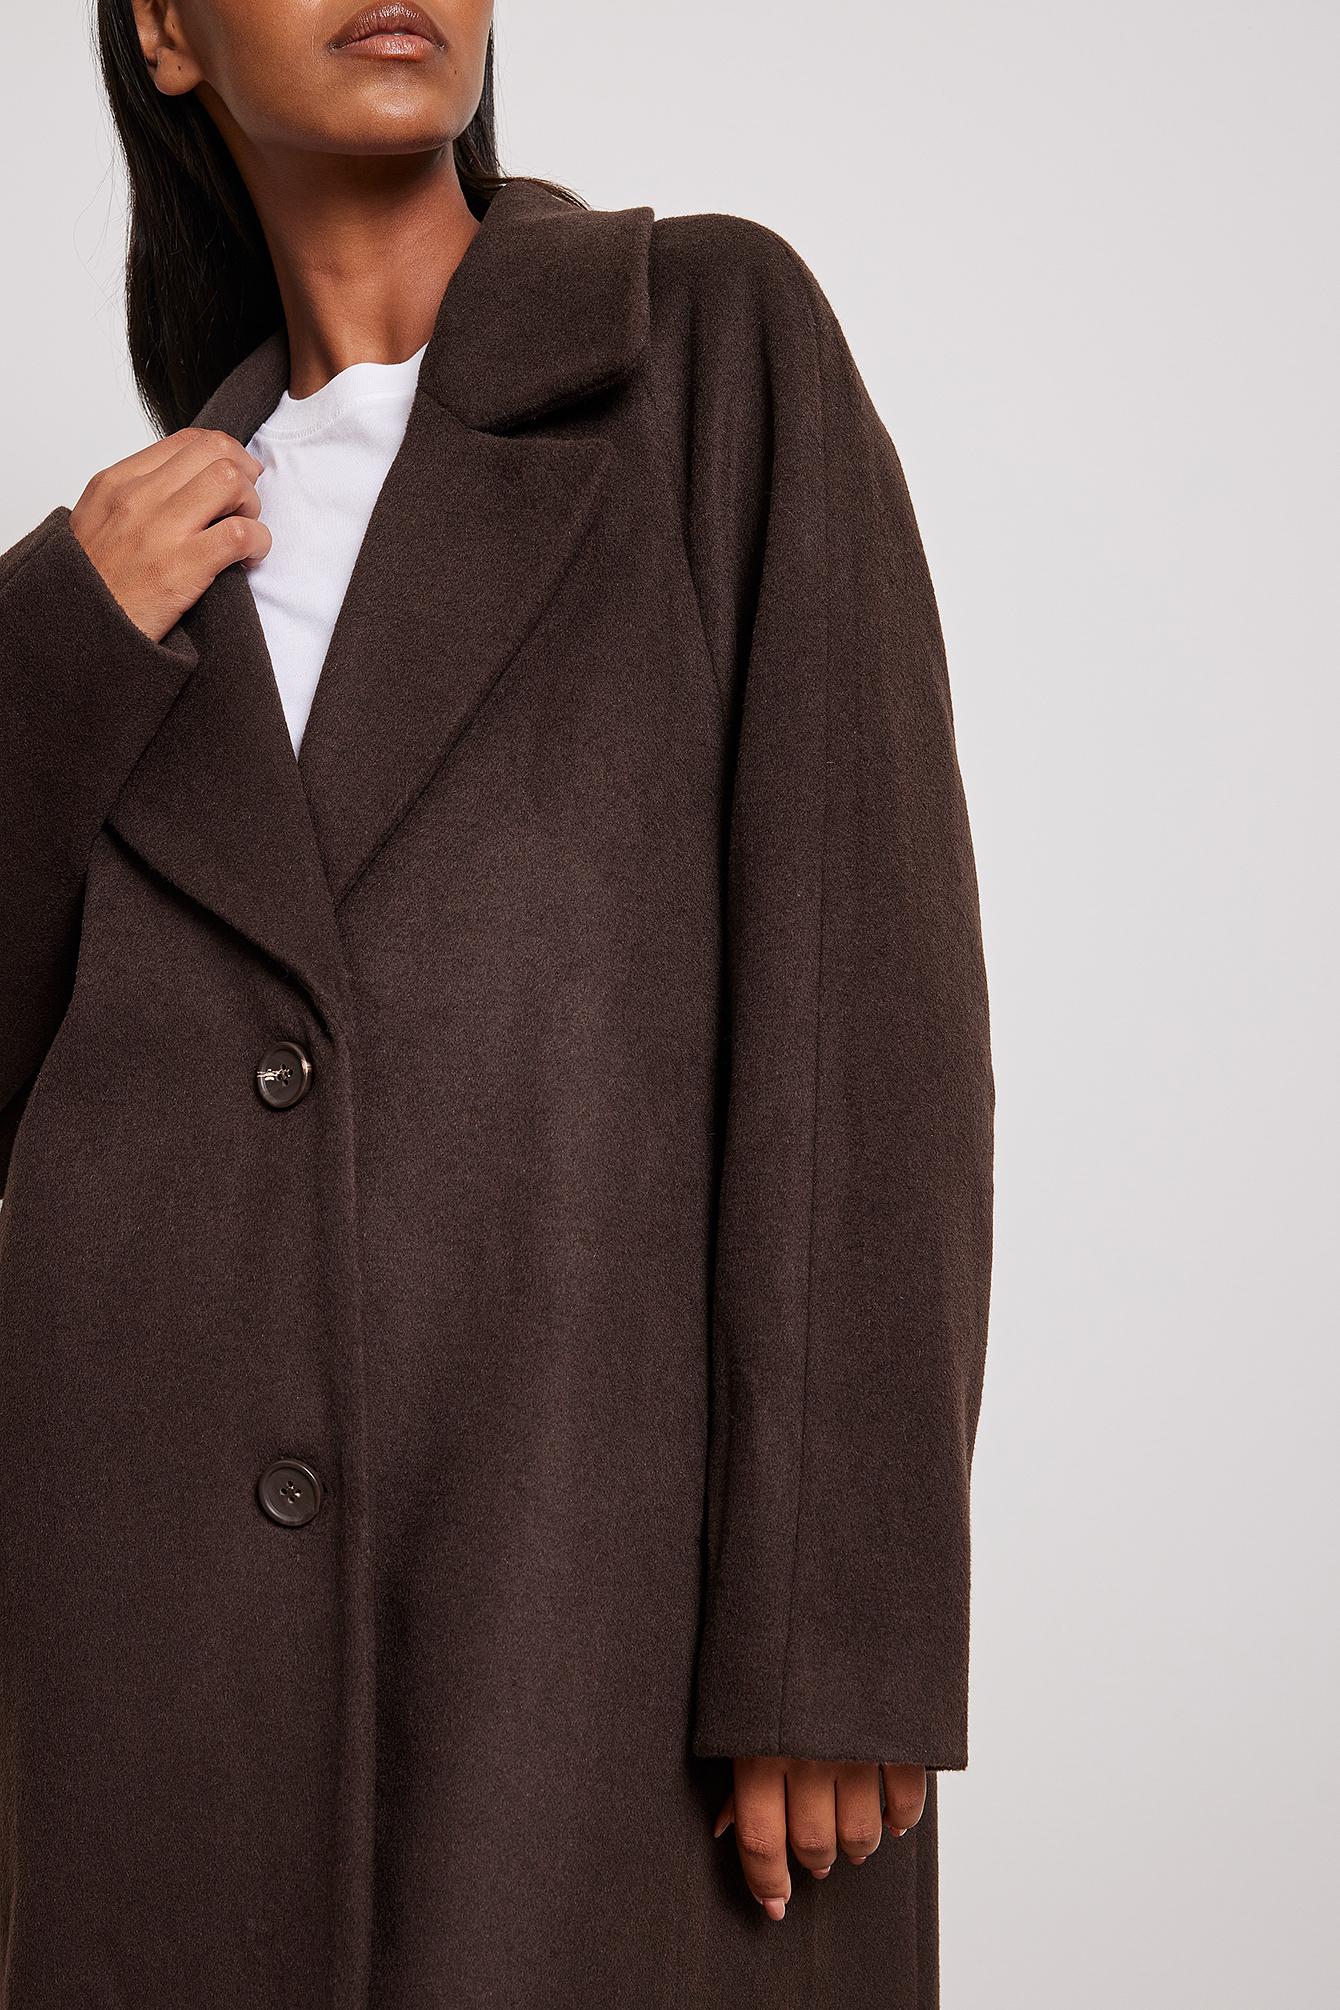 NA-KD Wool Blend Oversized Coat in Brown | Lyst